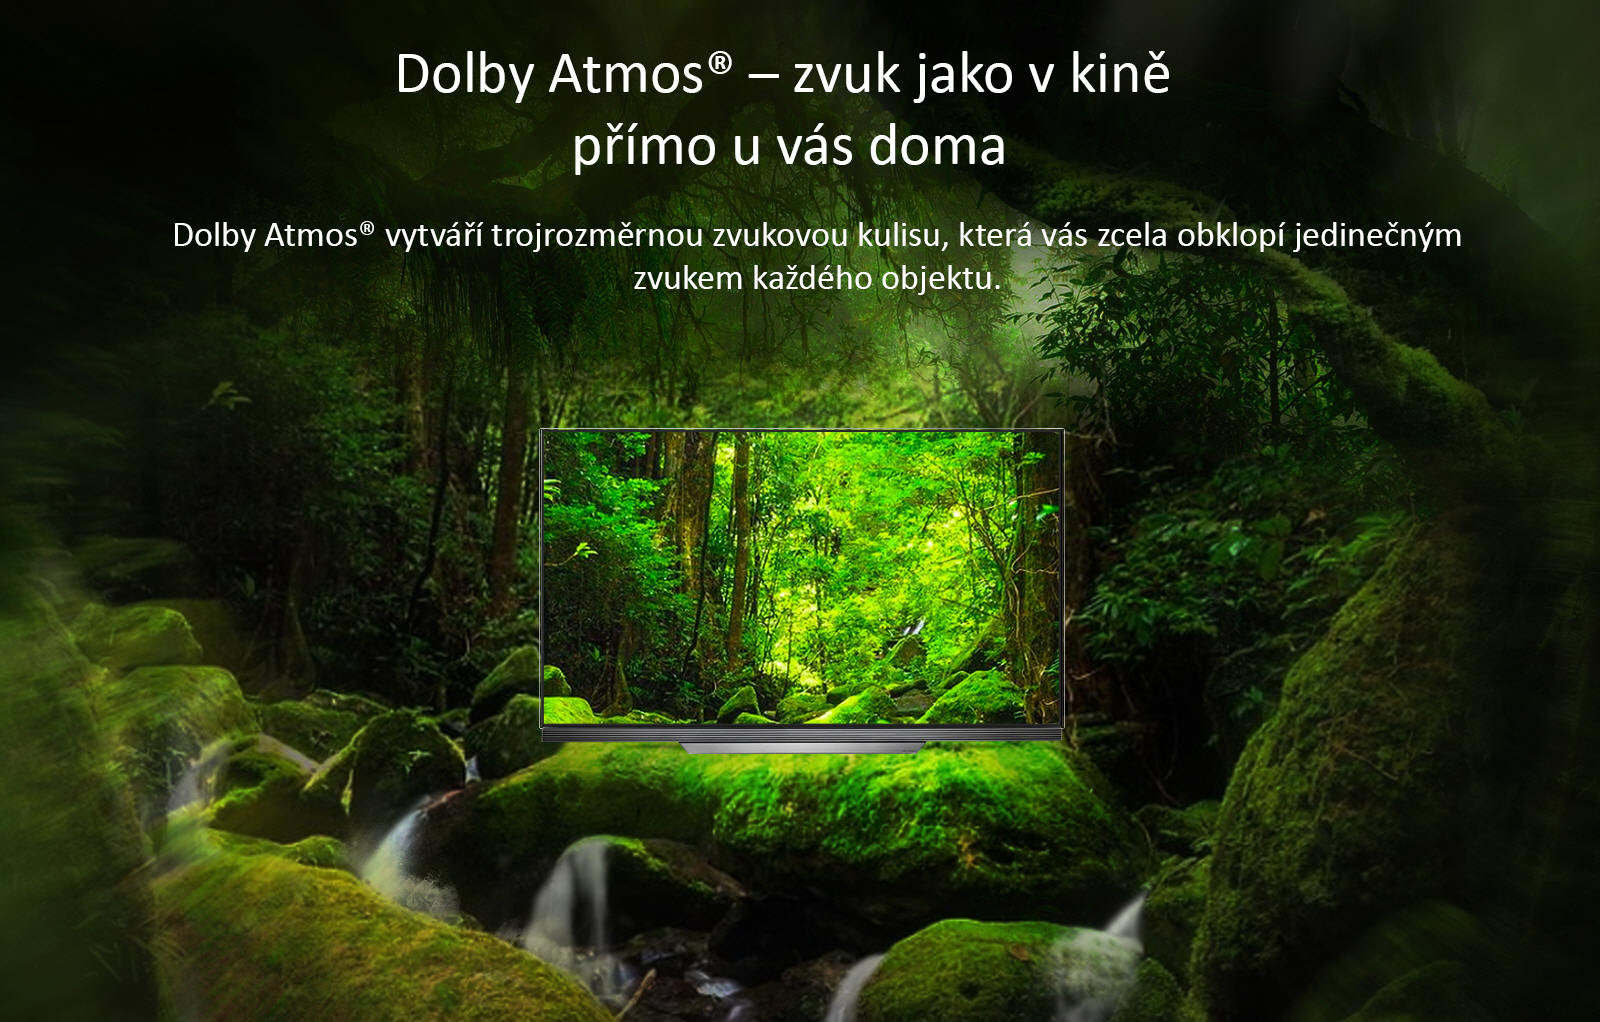 LG Dolby Atmos